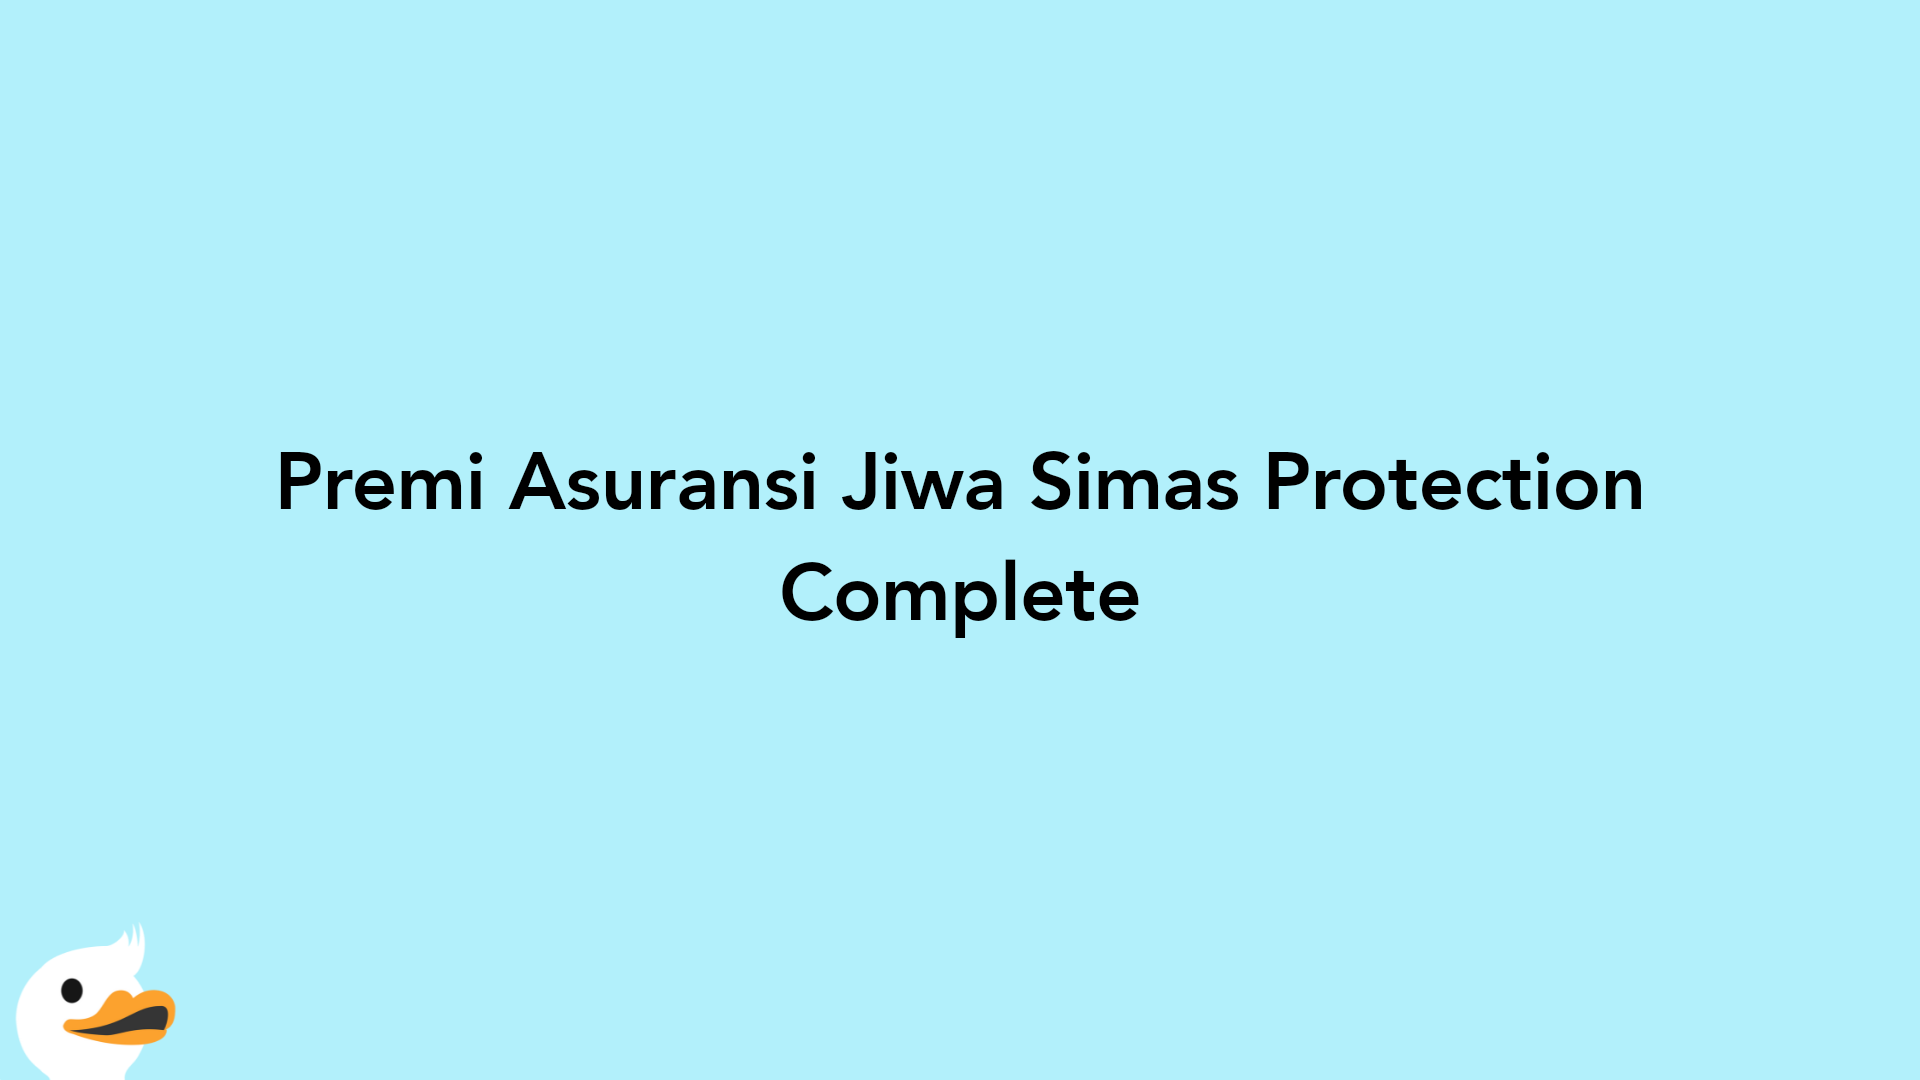 Premi Asuransi Jiwa Simas Protection Complete